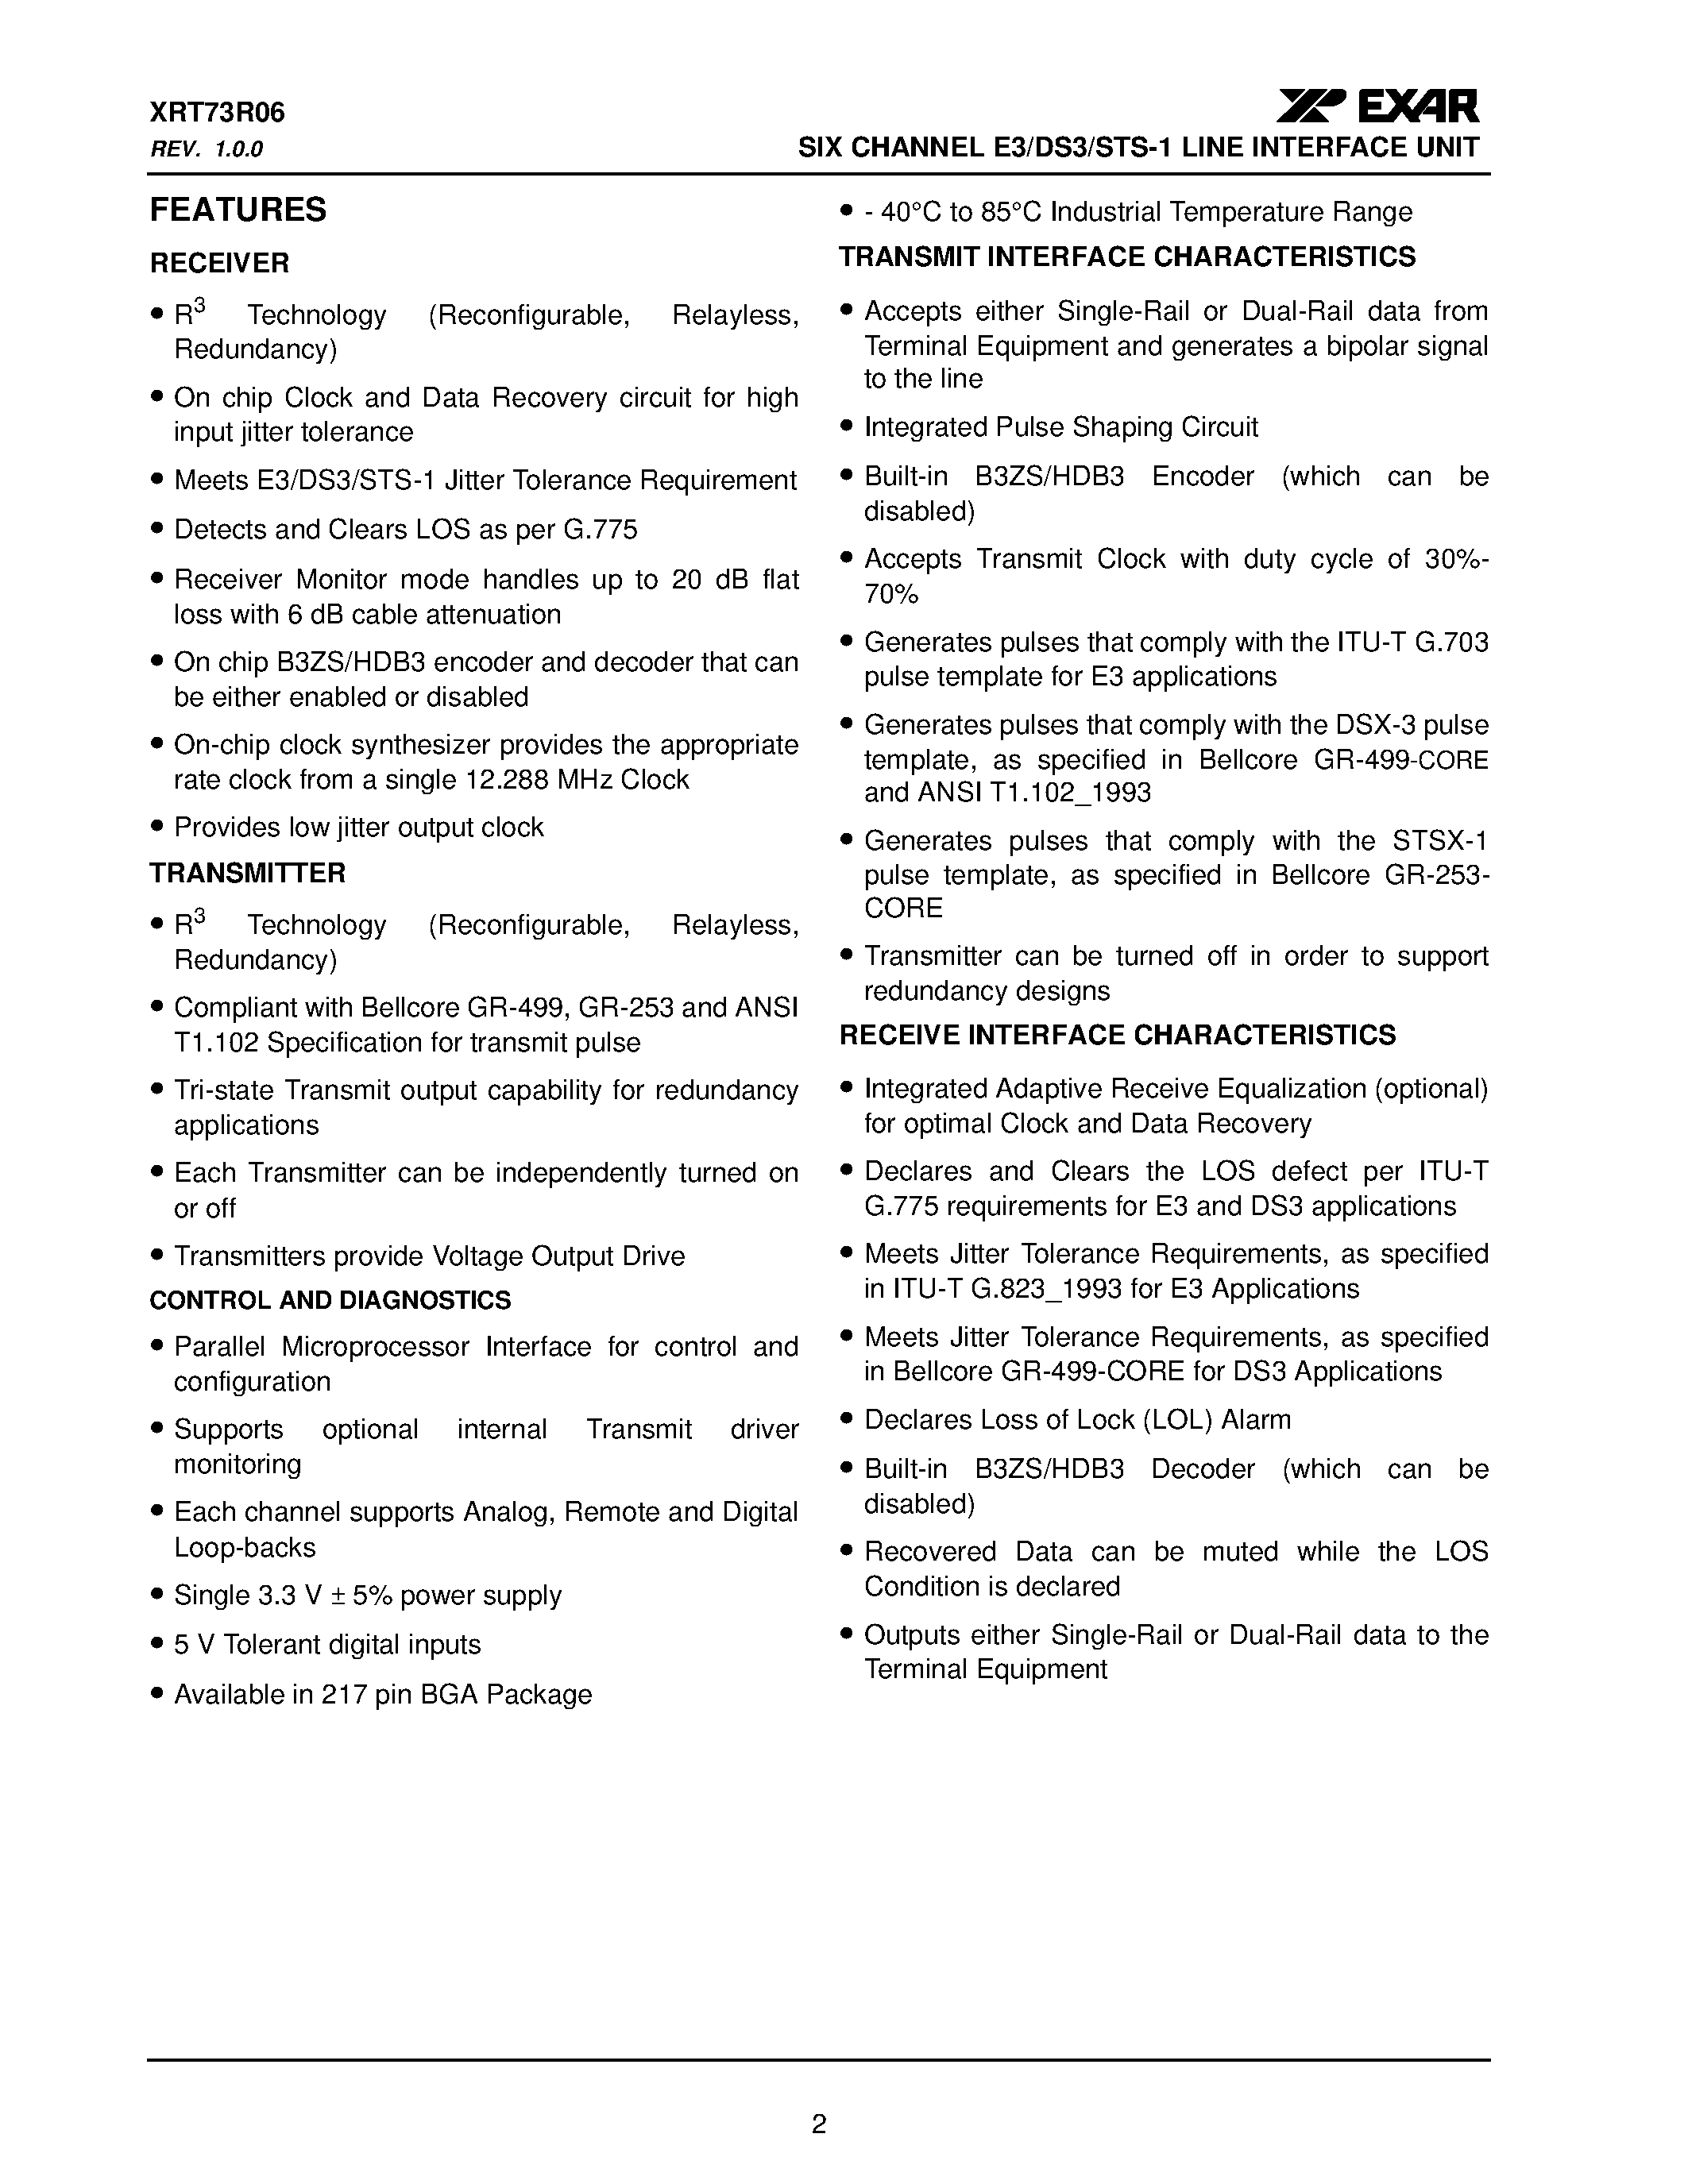 Datasheet XRT73R06 - SIX CHANNEL E3/DS3/STS-1 LINE INTERFACE UNIT page 2